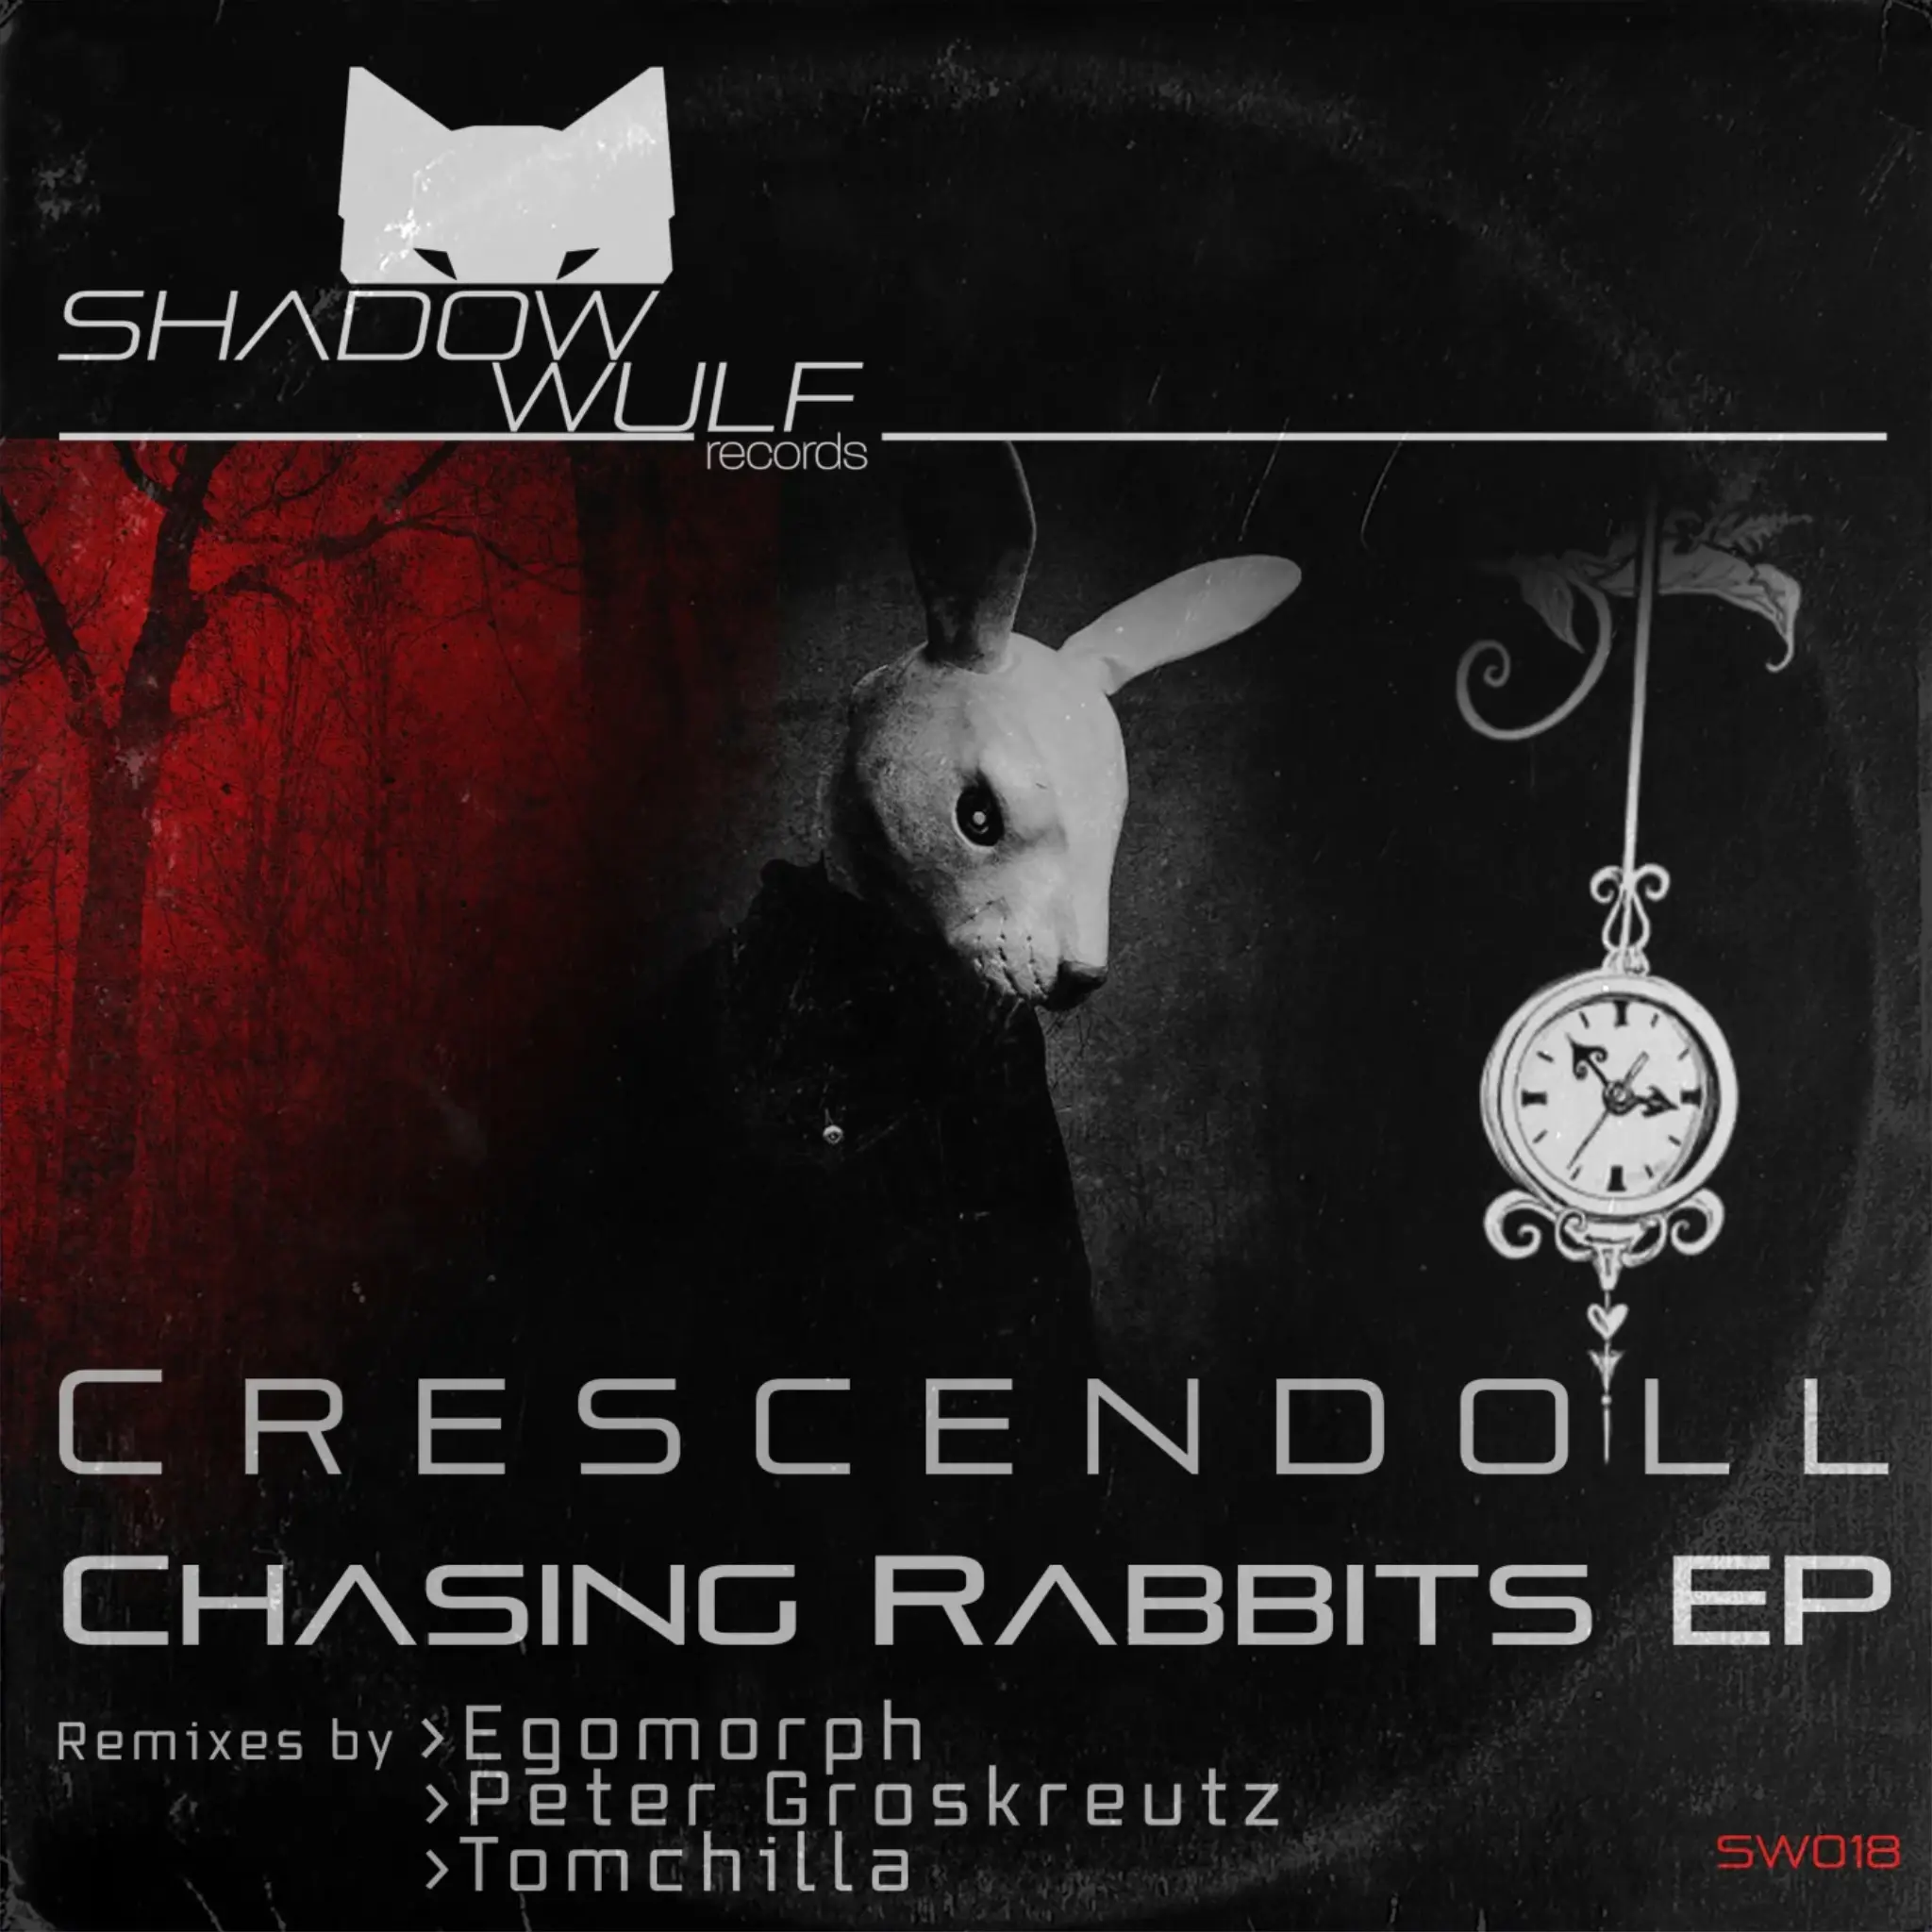 Crescendoll - Chasing Rabbits